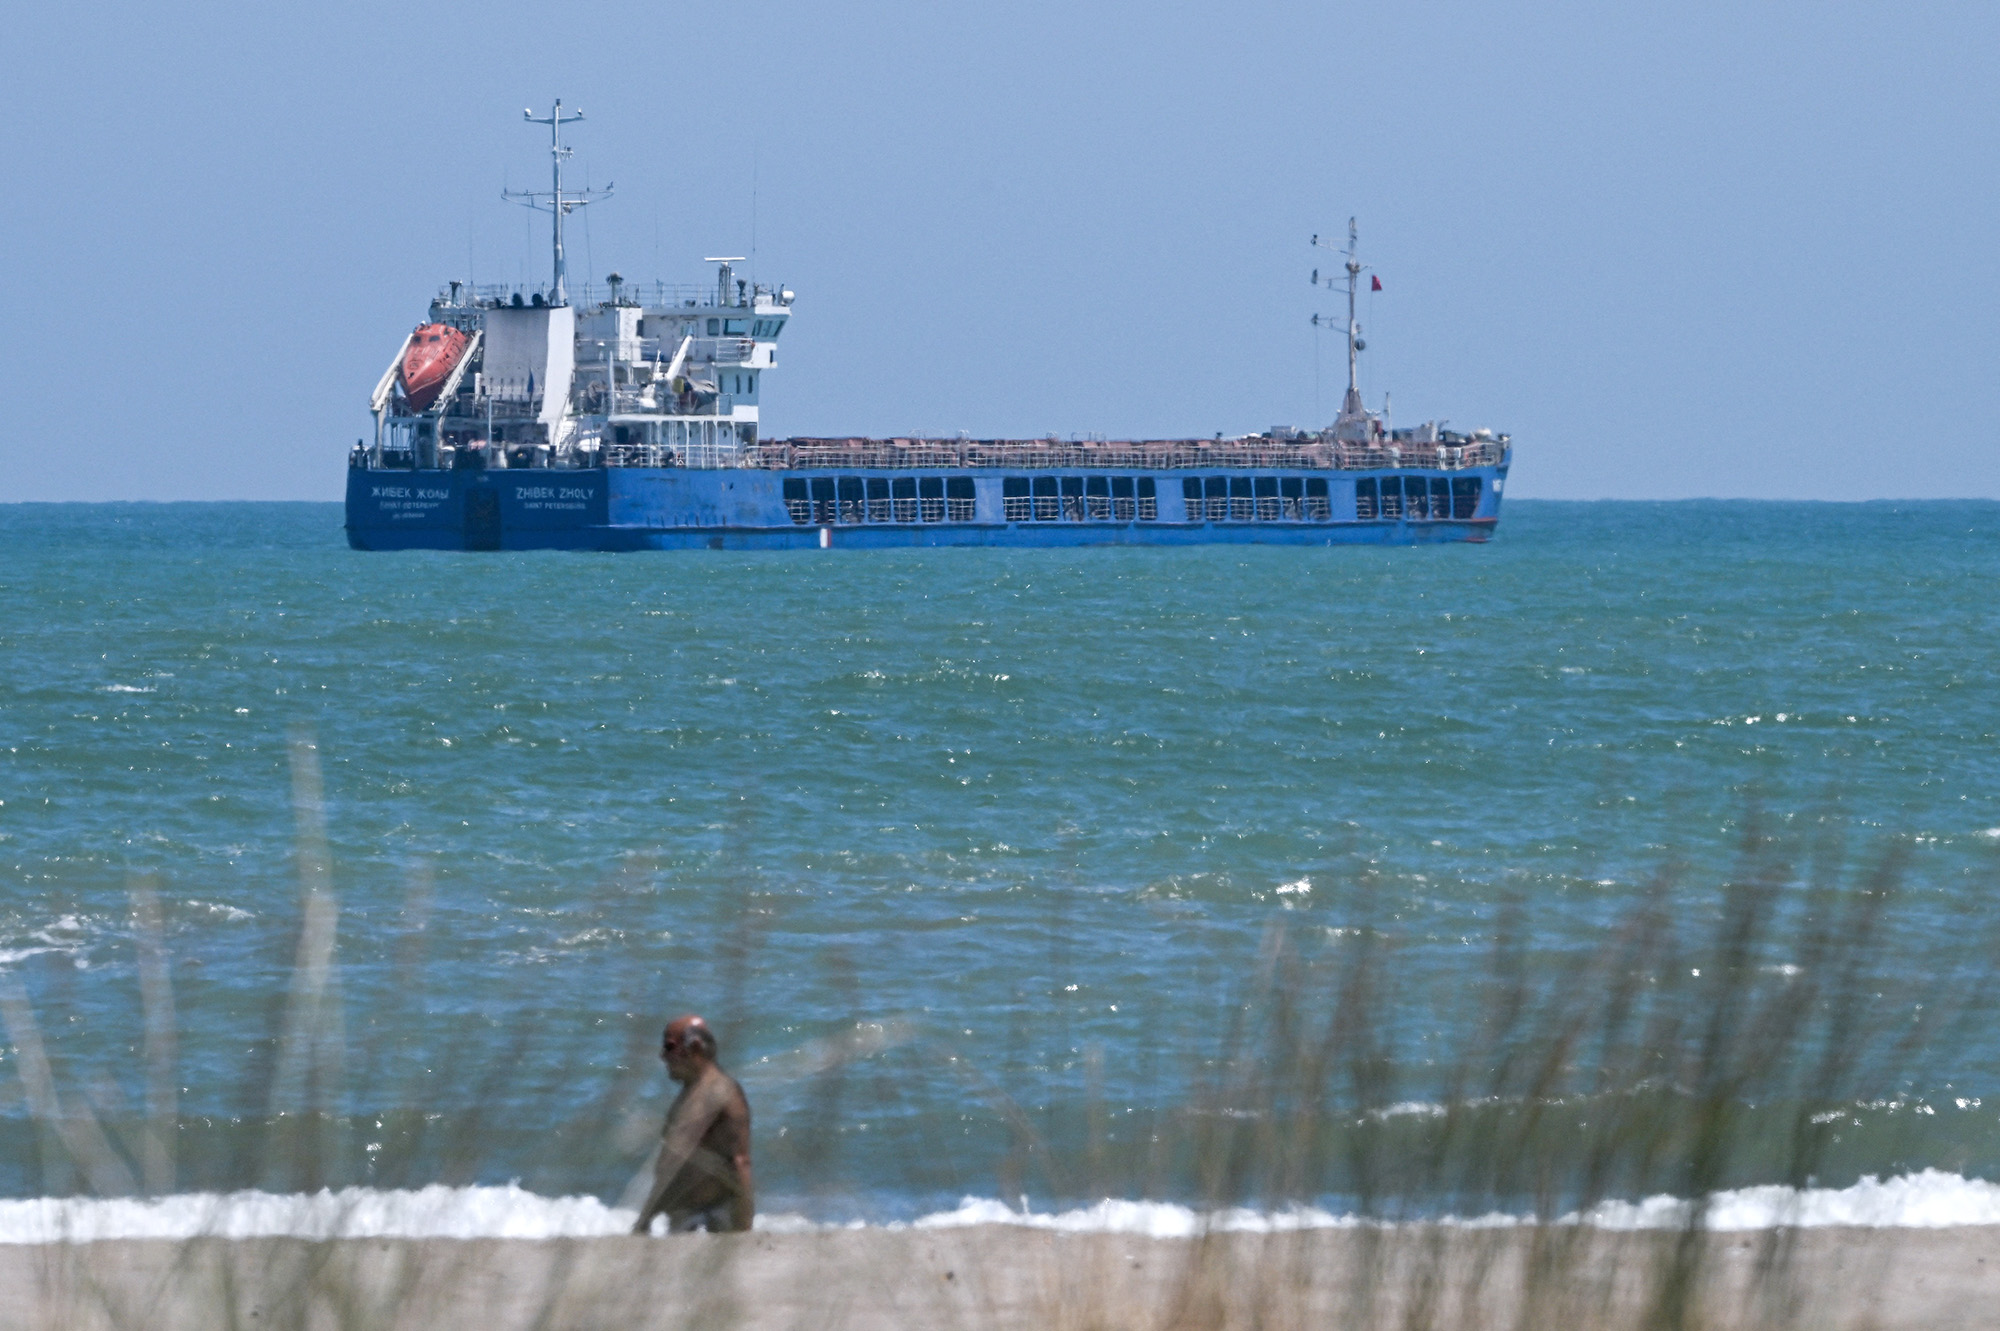 Cargo ship flying the Russian flag "Zhibek Zholy" anchored off the coast of the Black Sea, Turkey, July 5.